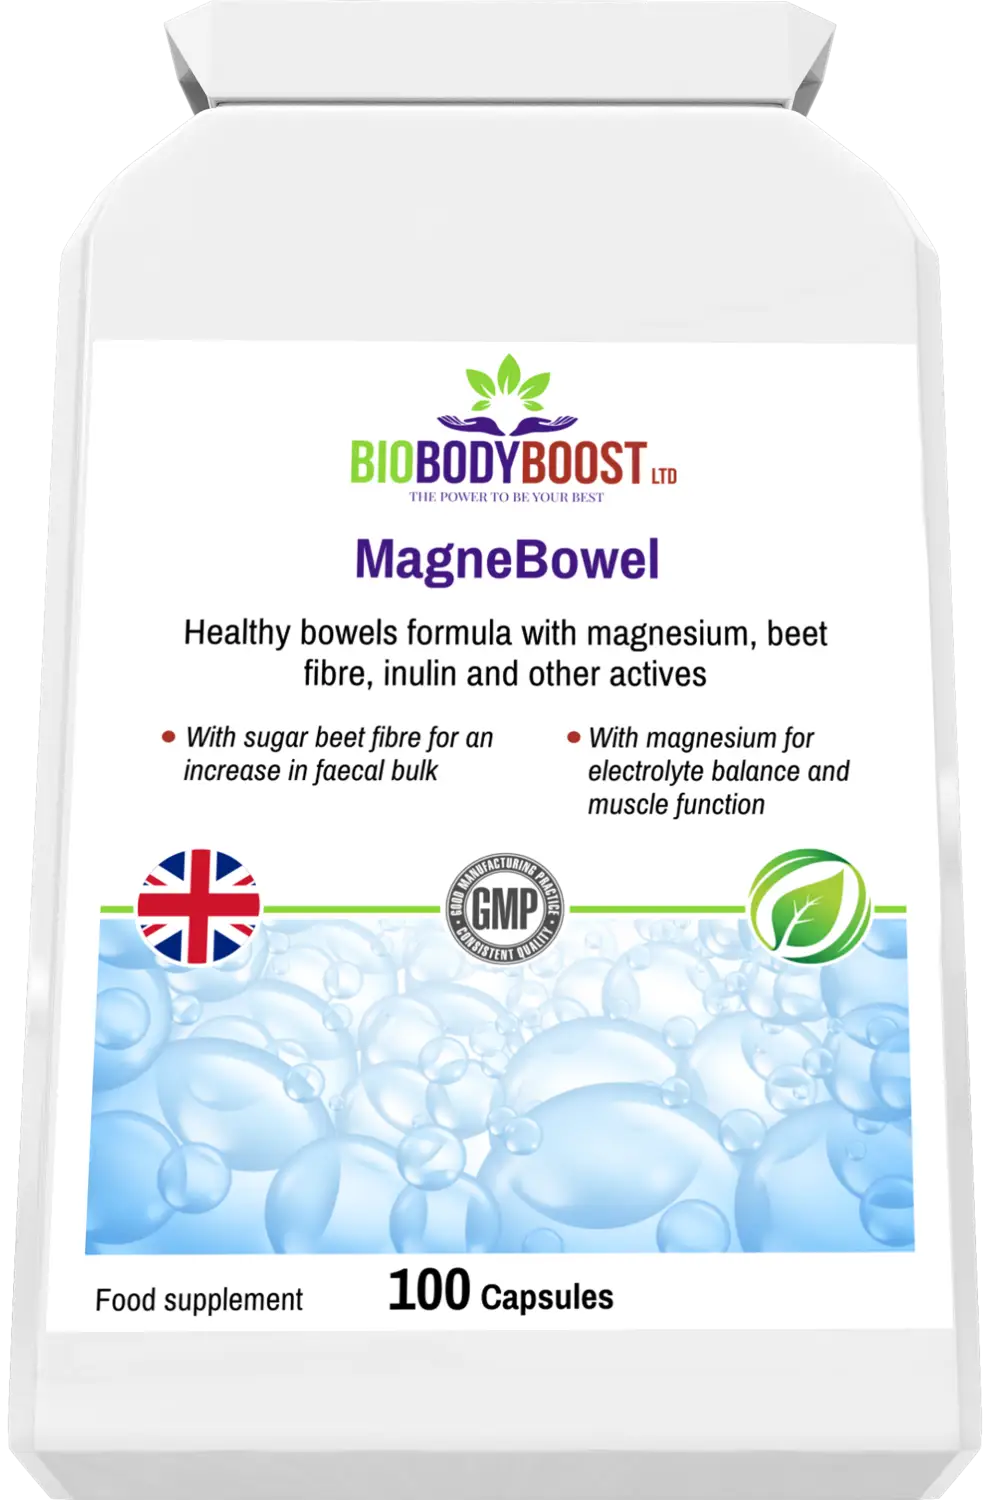 Magnebowel magnesium cleanse & detox formula - vitamins supplements